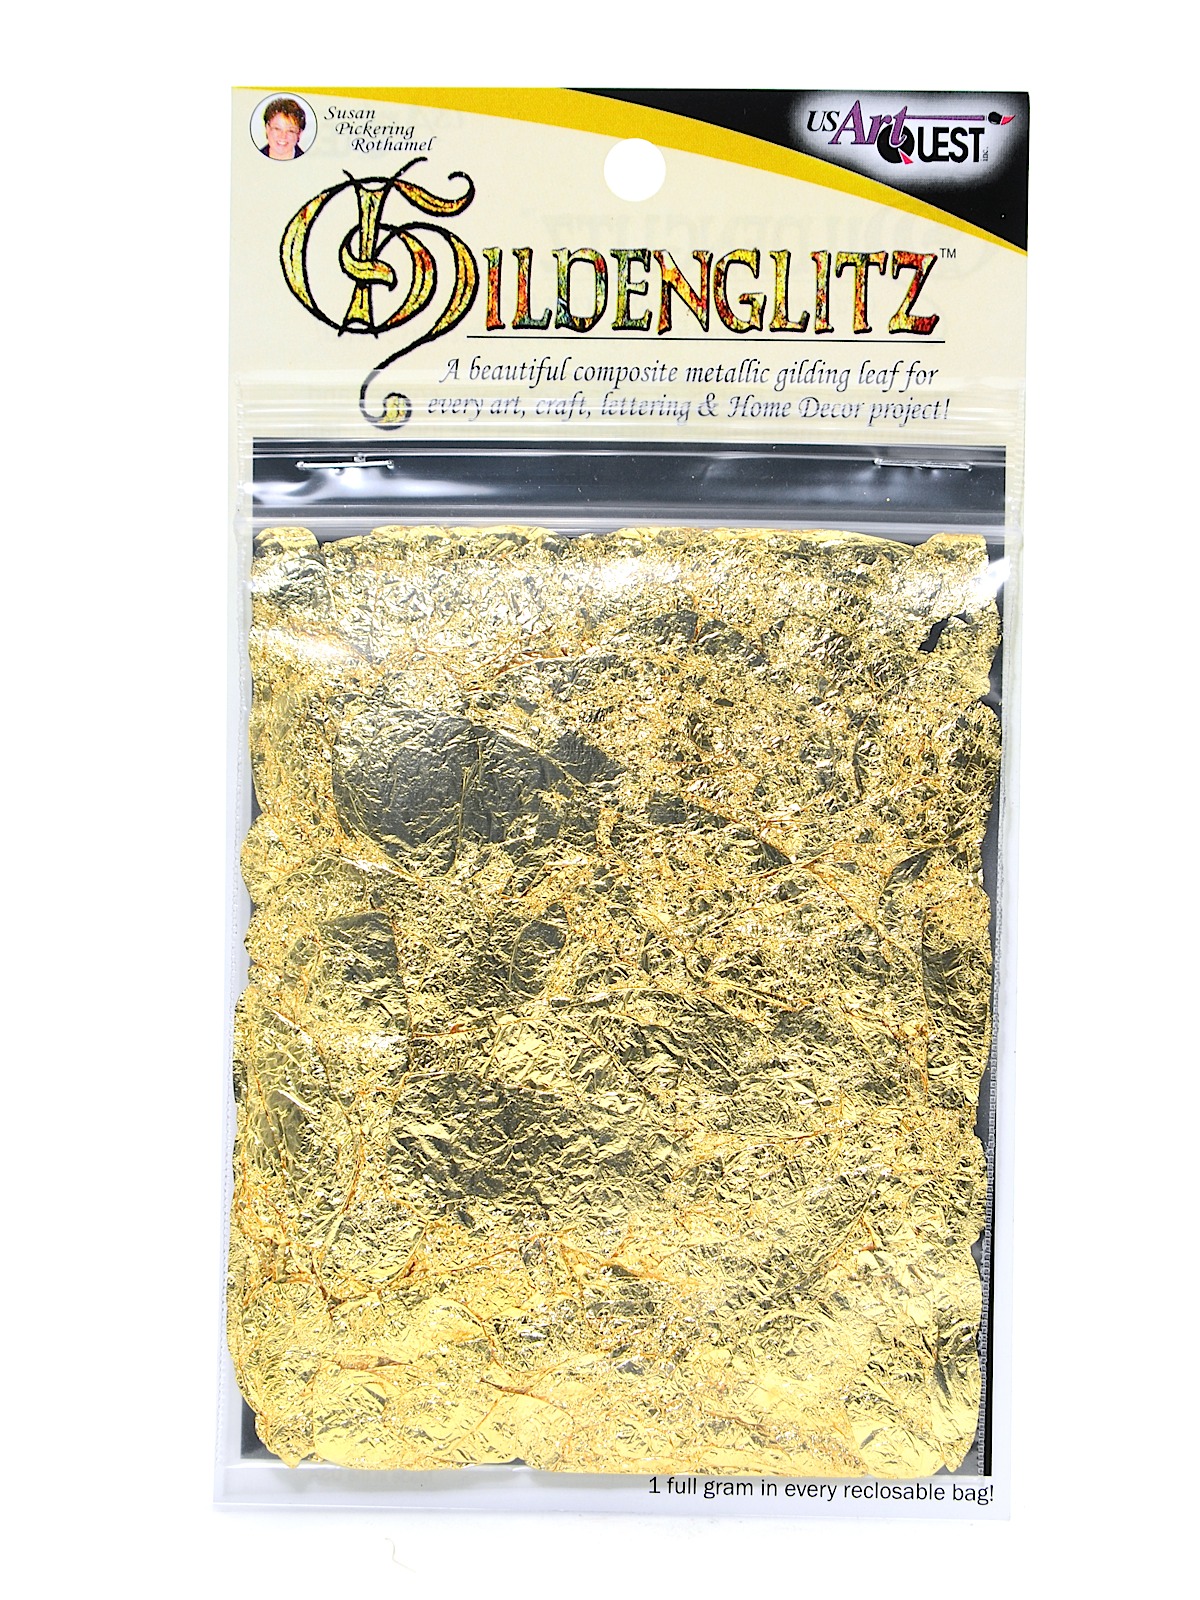 Gildenglitz Gold